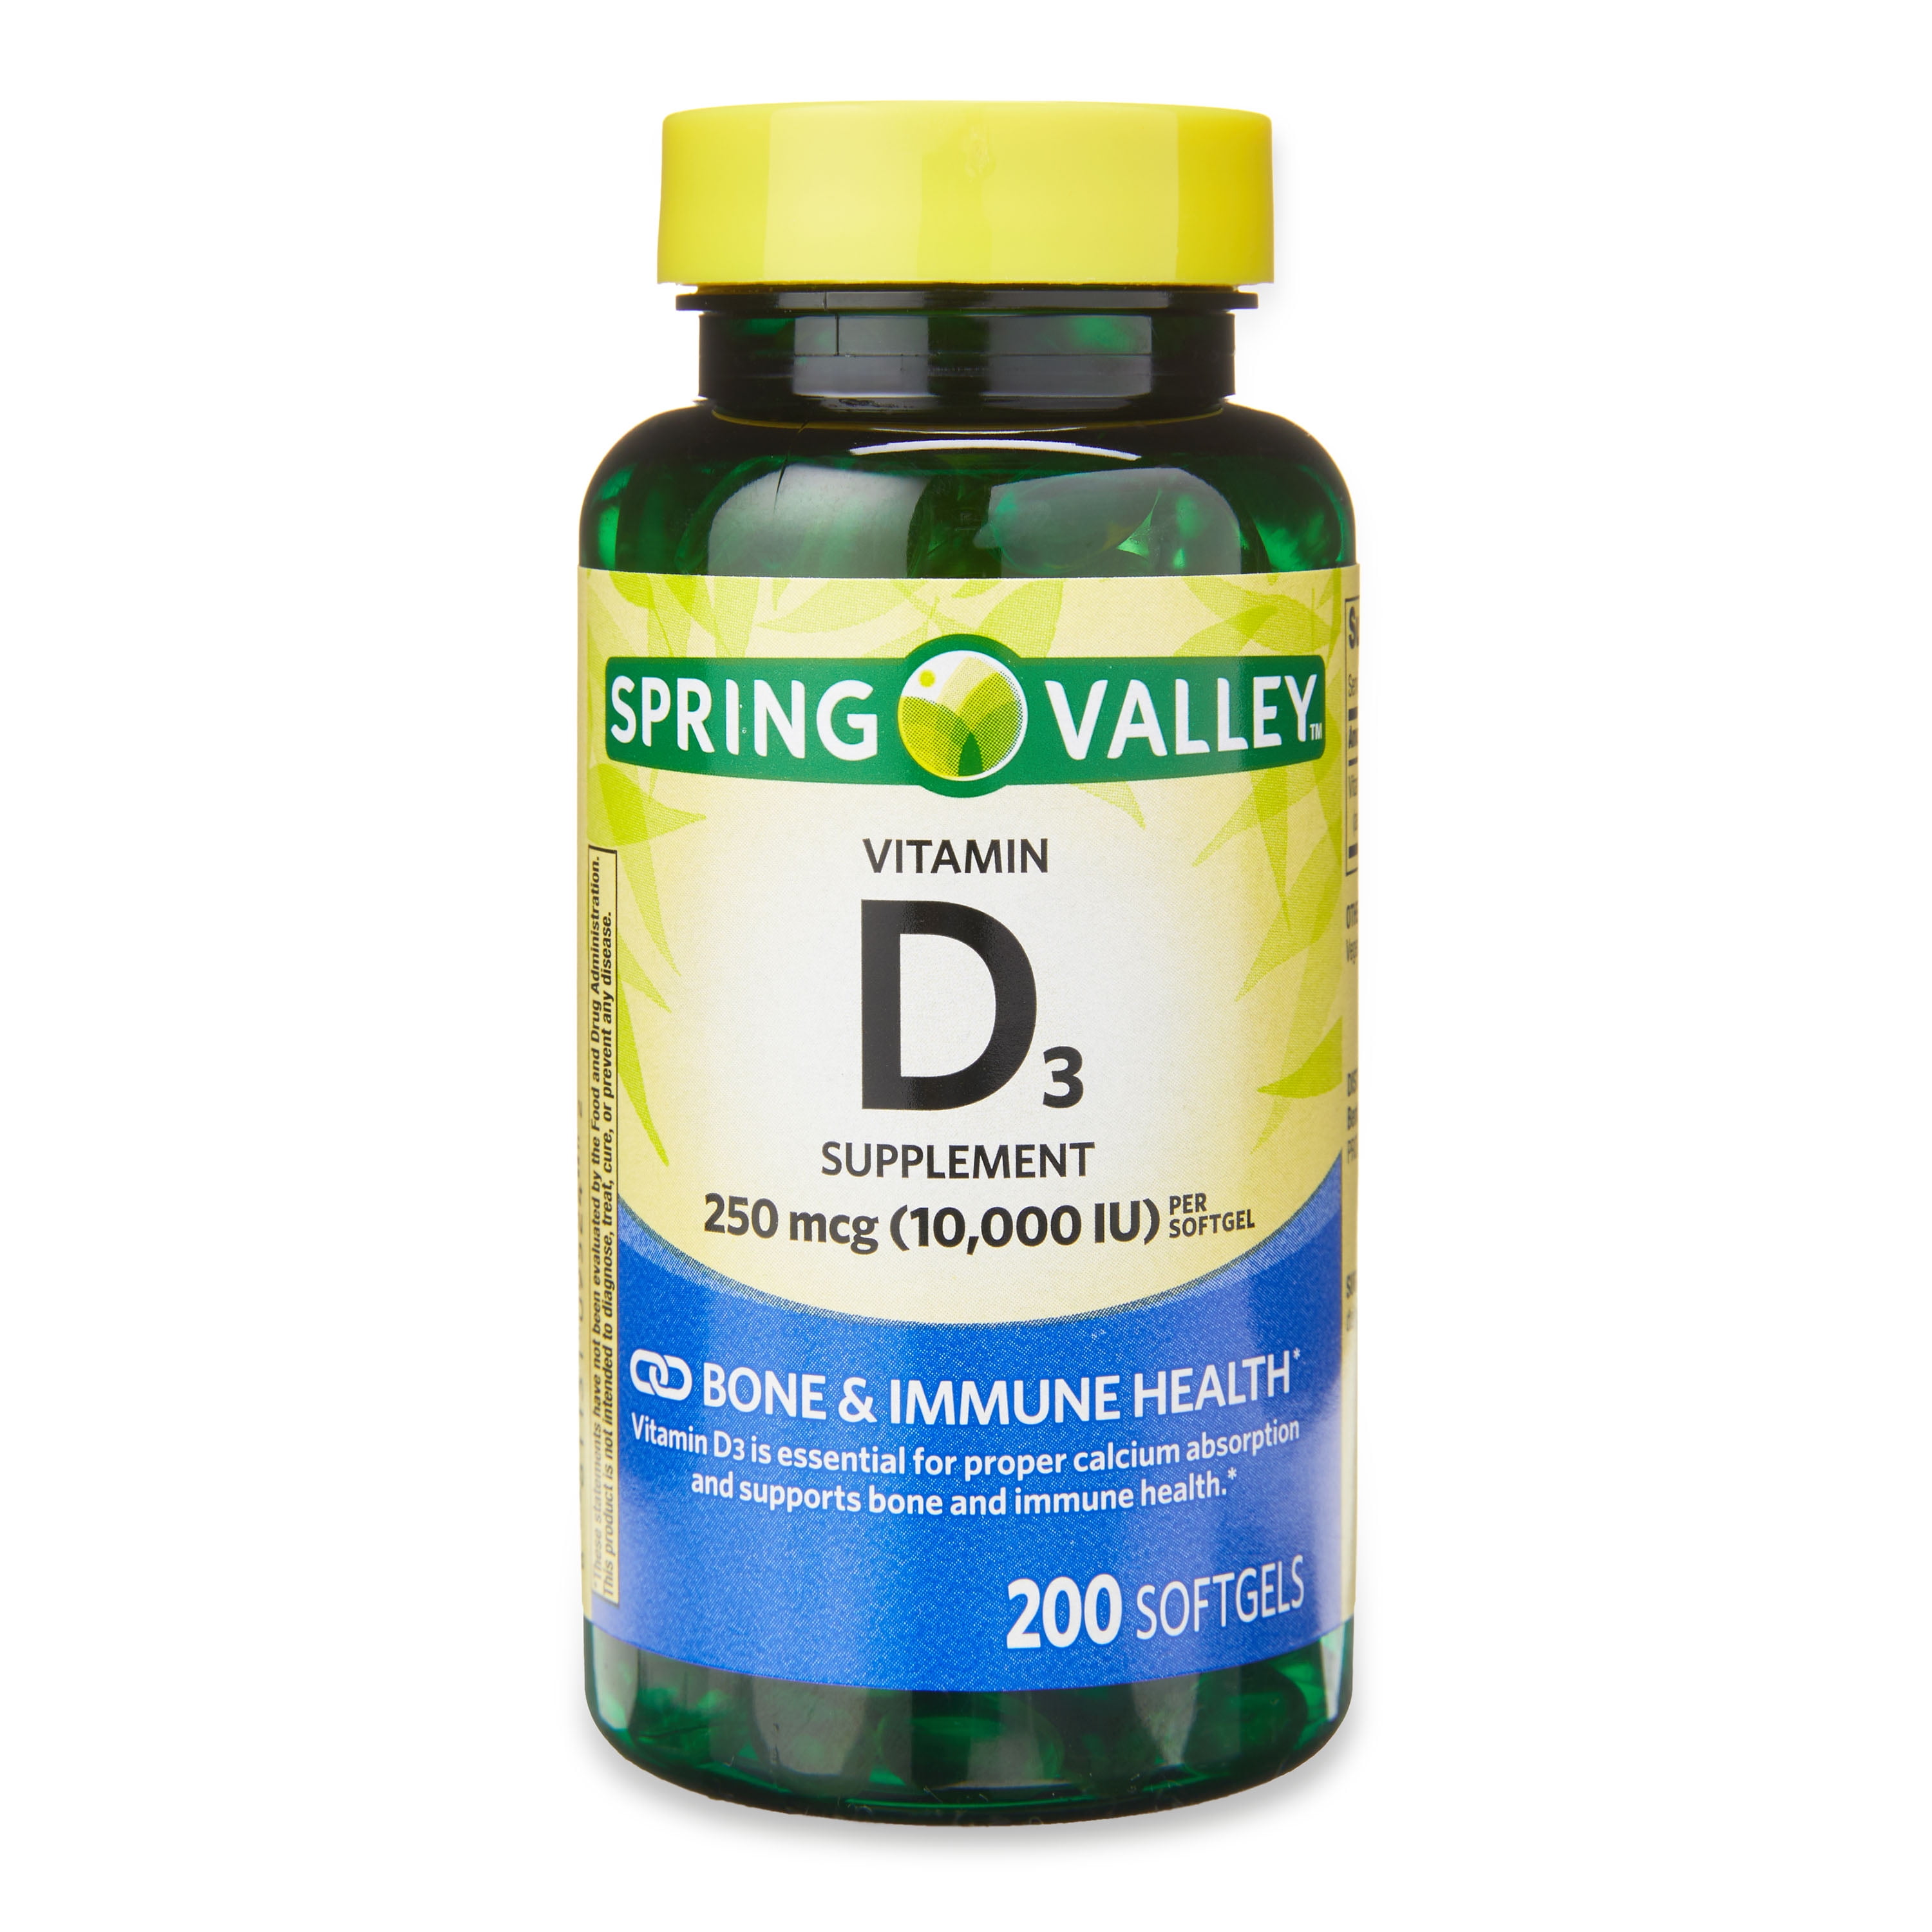 Spring Valley 10,000 IU Vitamin D3 Supplement, Softgels, 200 Count